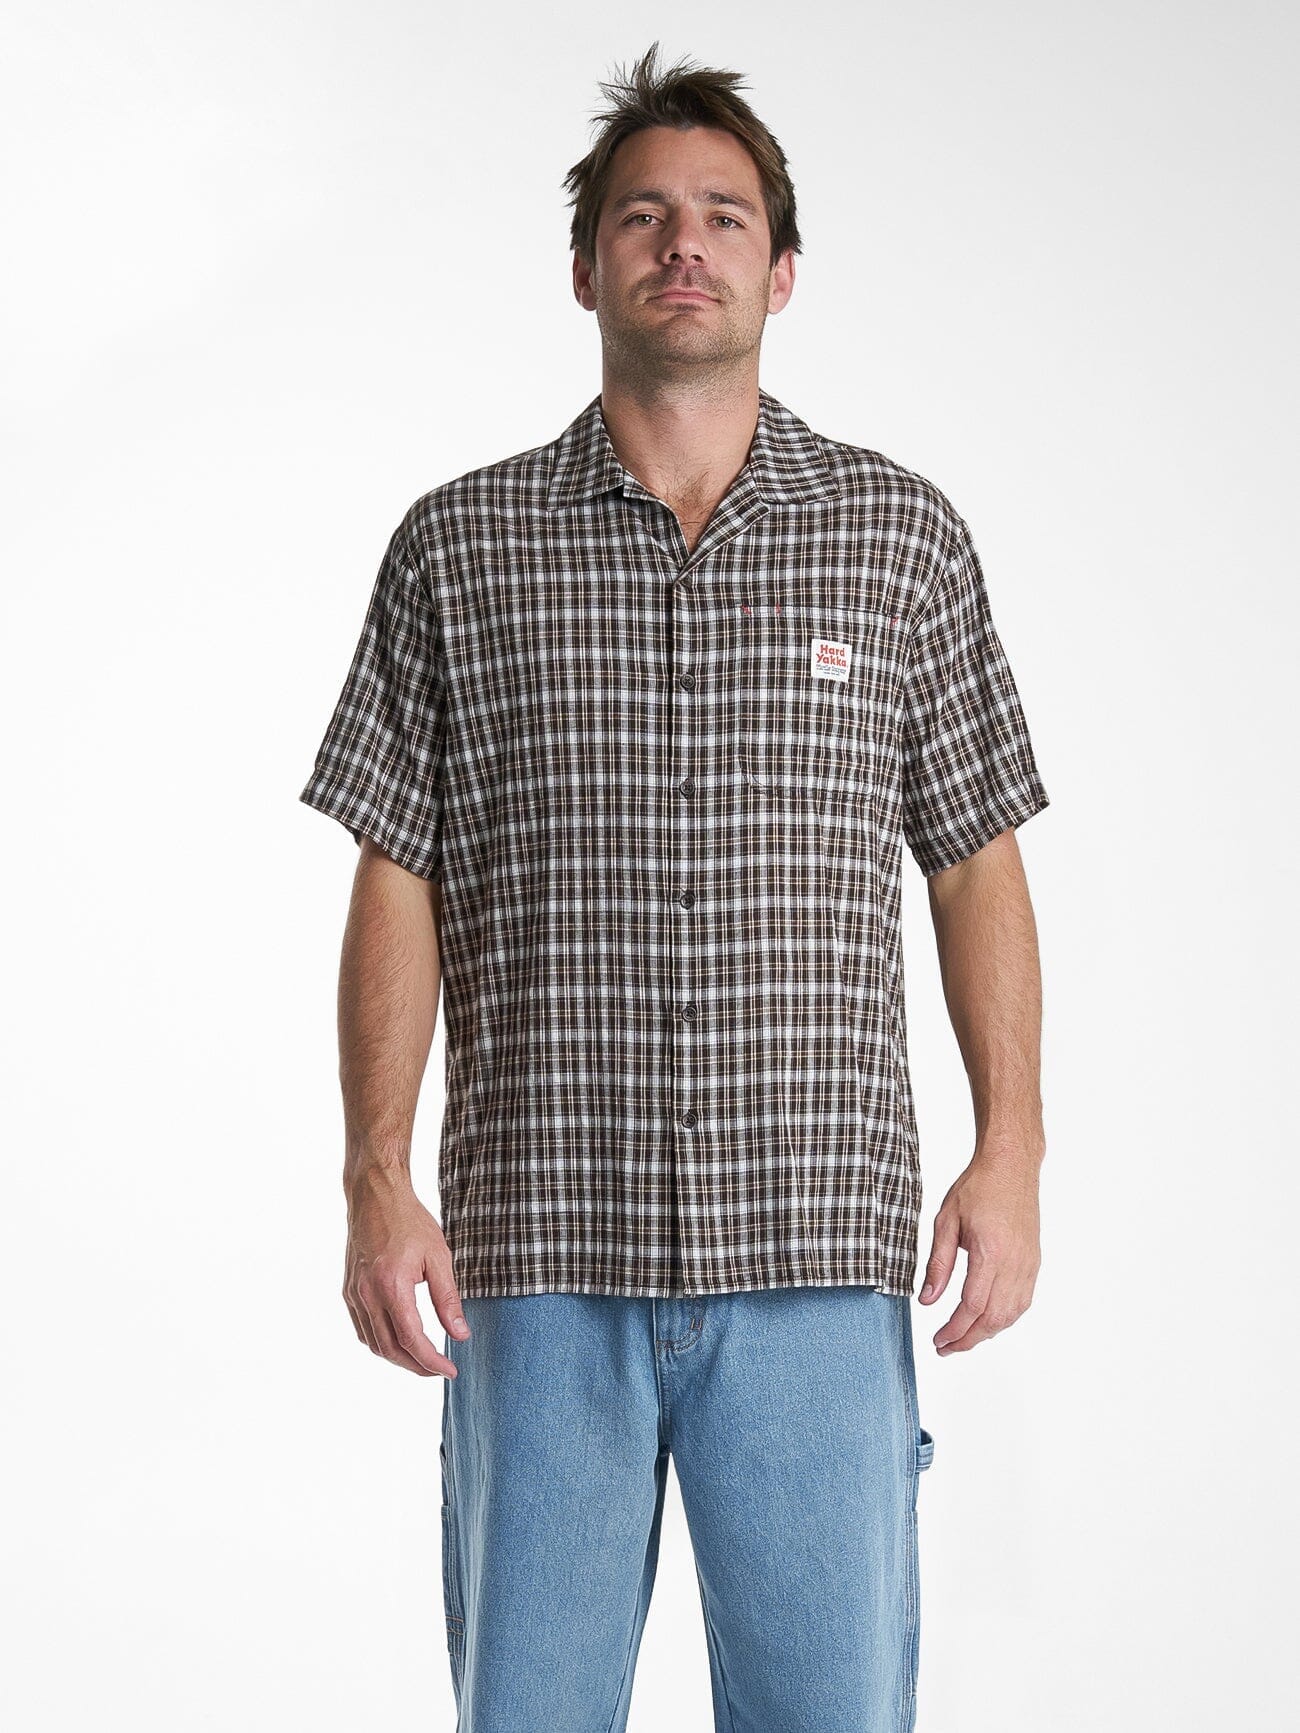 Hard Yakka X Thrills Short Sleeve Check Shirt - Postal Brown